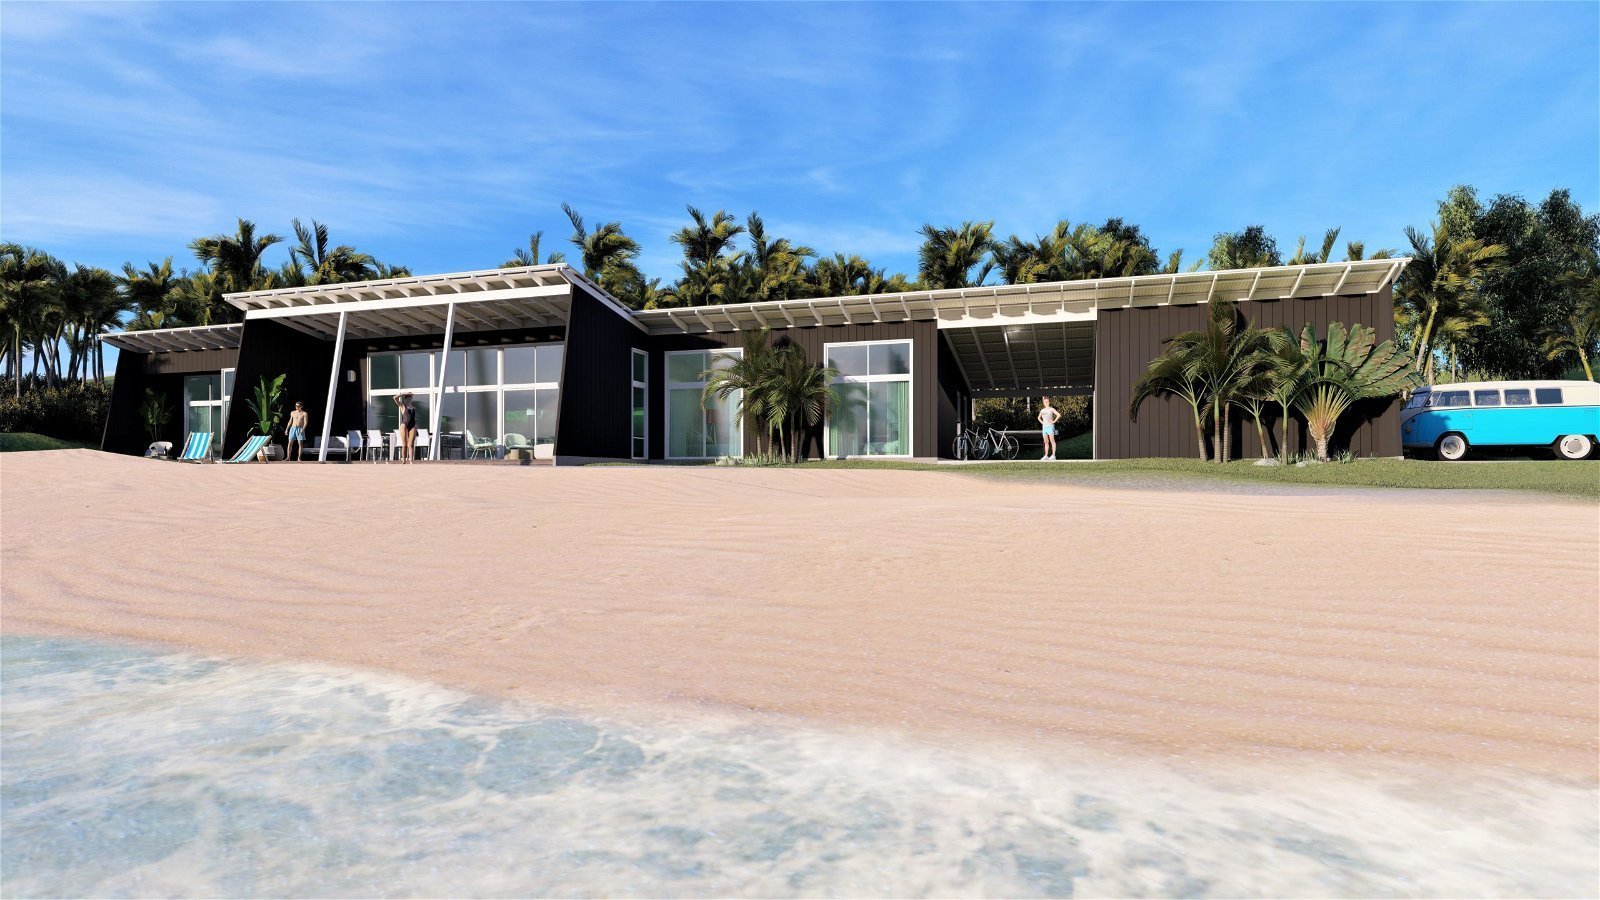 Rural Building Company - The Seaside Retreat (Original) - Gallery - Seaside Retreat Seaside 05 Scaled